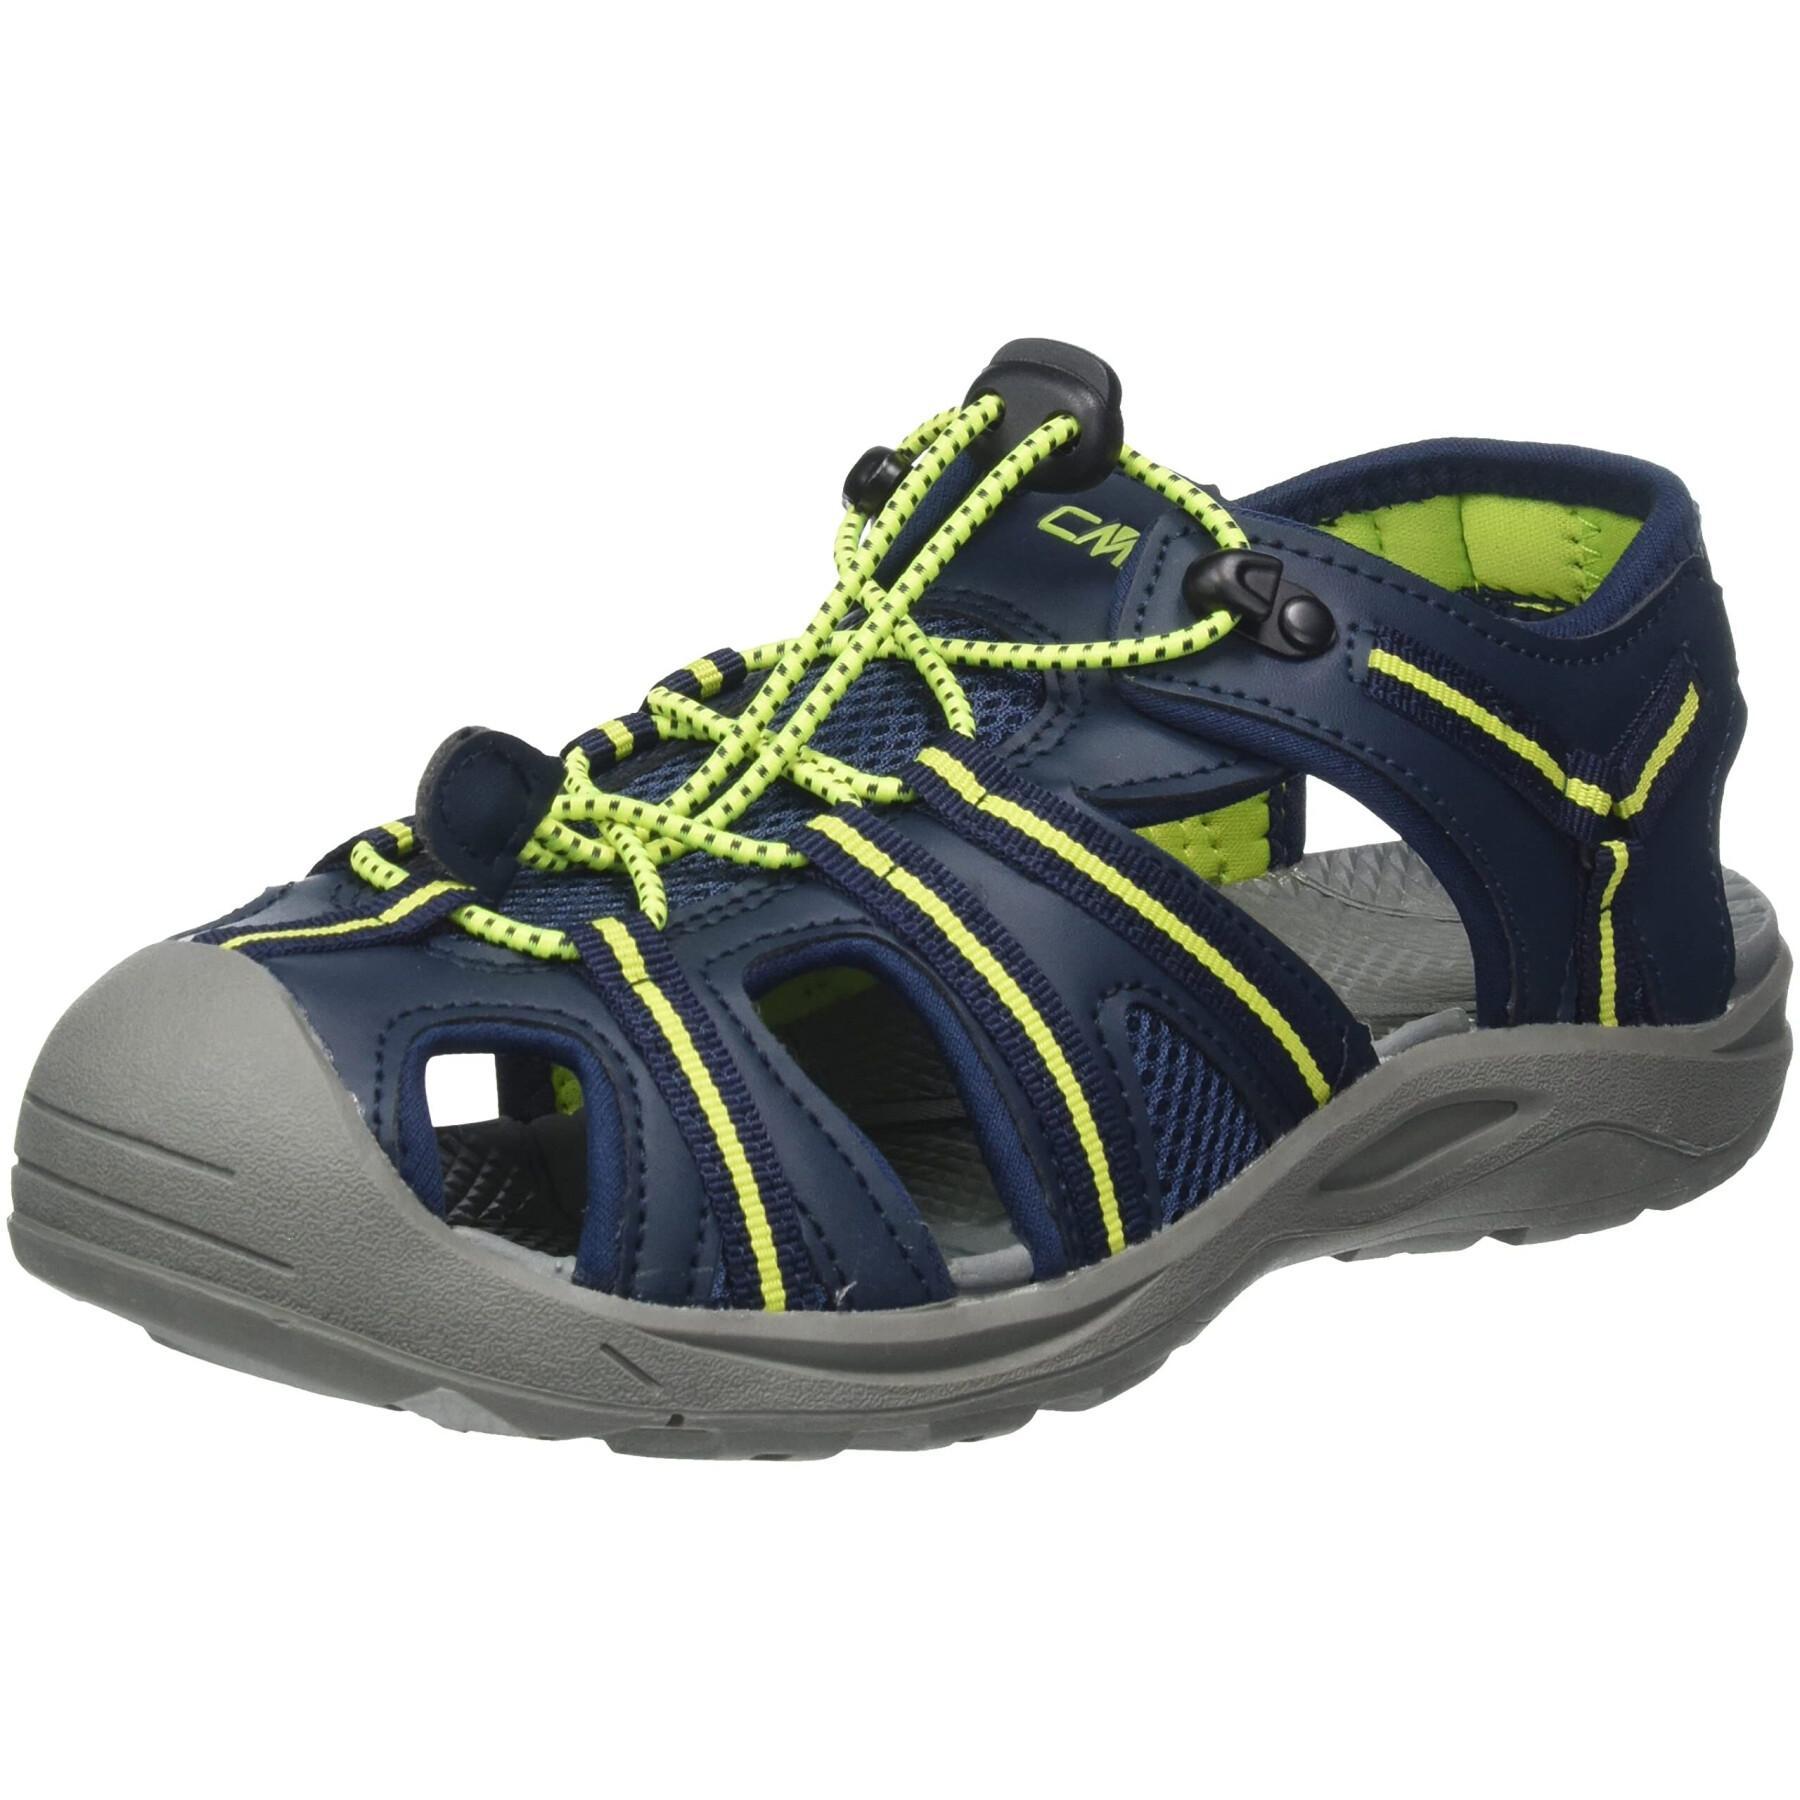 Children\'s sandals CMP Aquari 2.0 - Hiking Sandals - Hiking Shoes - Hiking